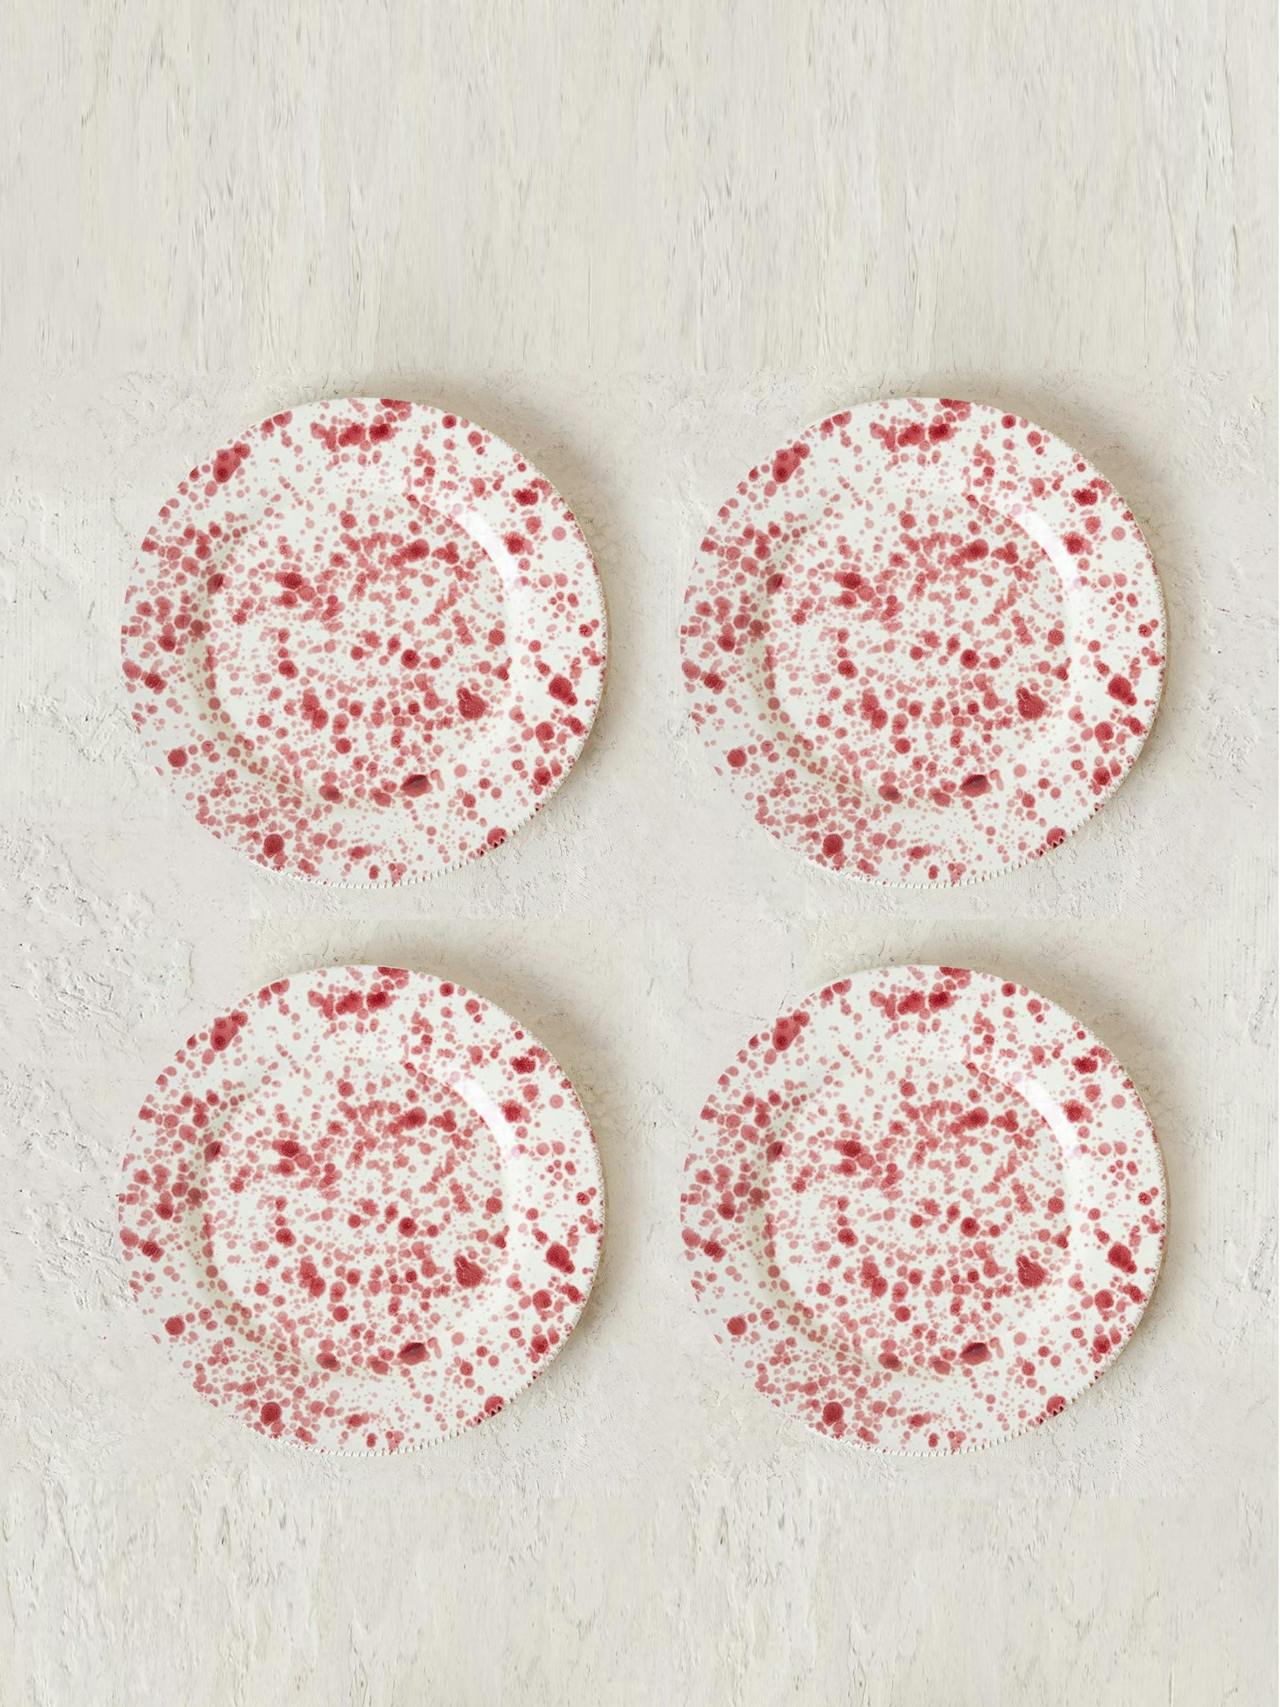 Cranberry plates, set of 4